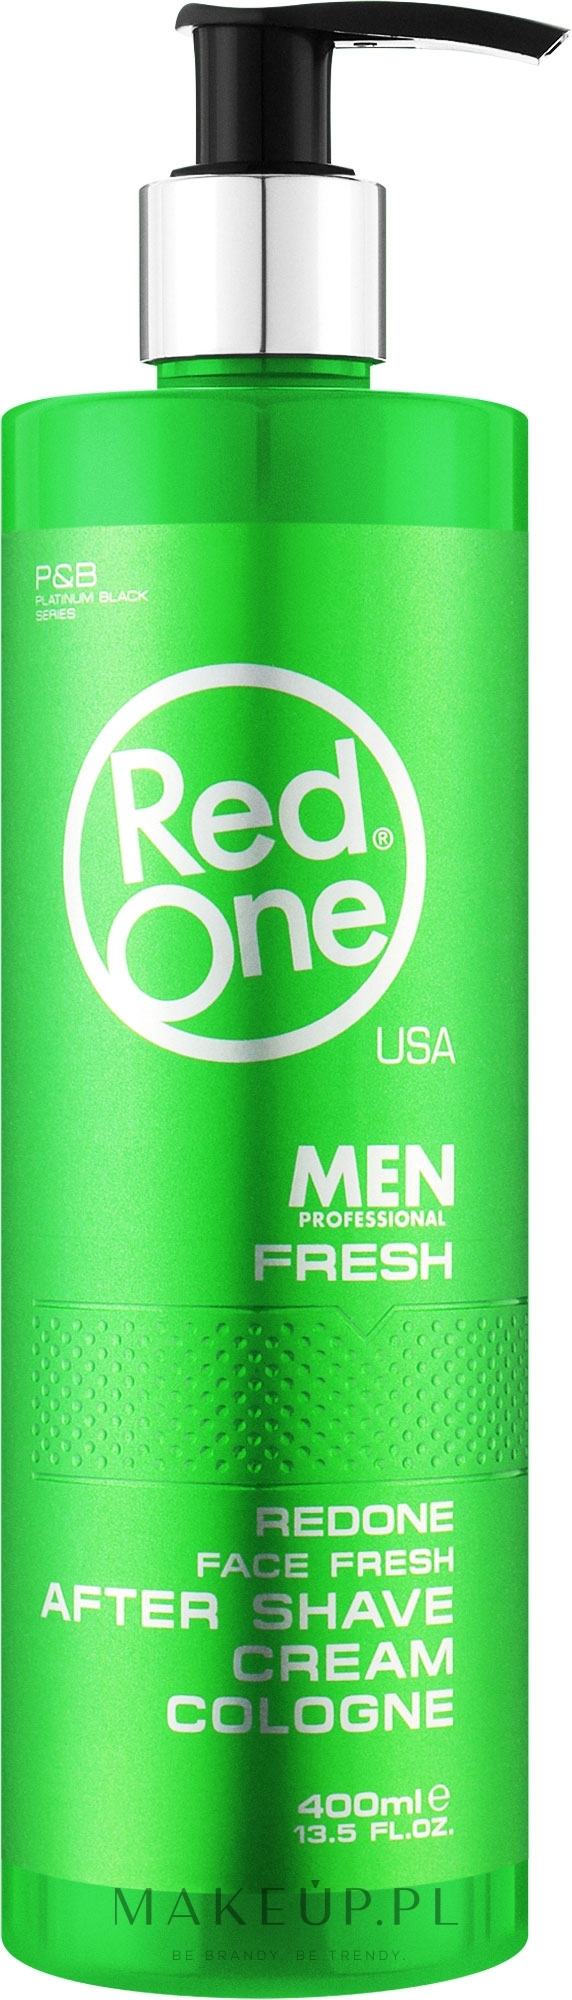 Perfumowany krem po goleniu - RedOne Aftershave Cream Cologne Fresh — Zdjęcie 400 ml